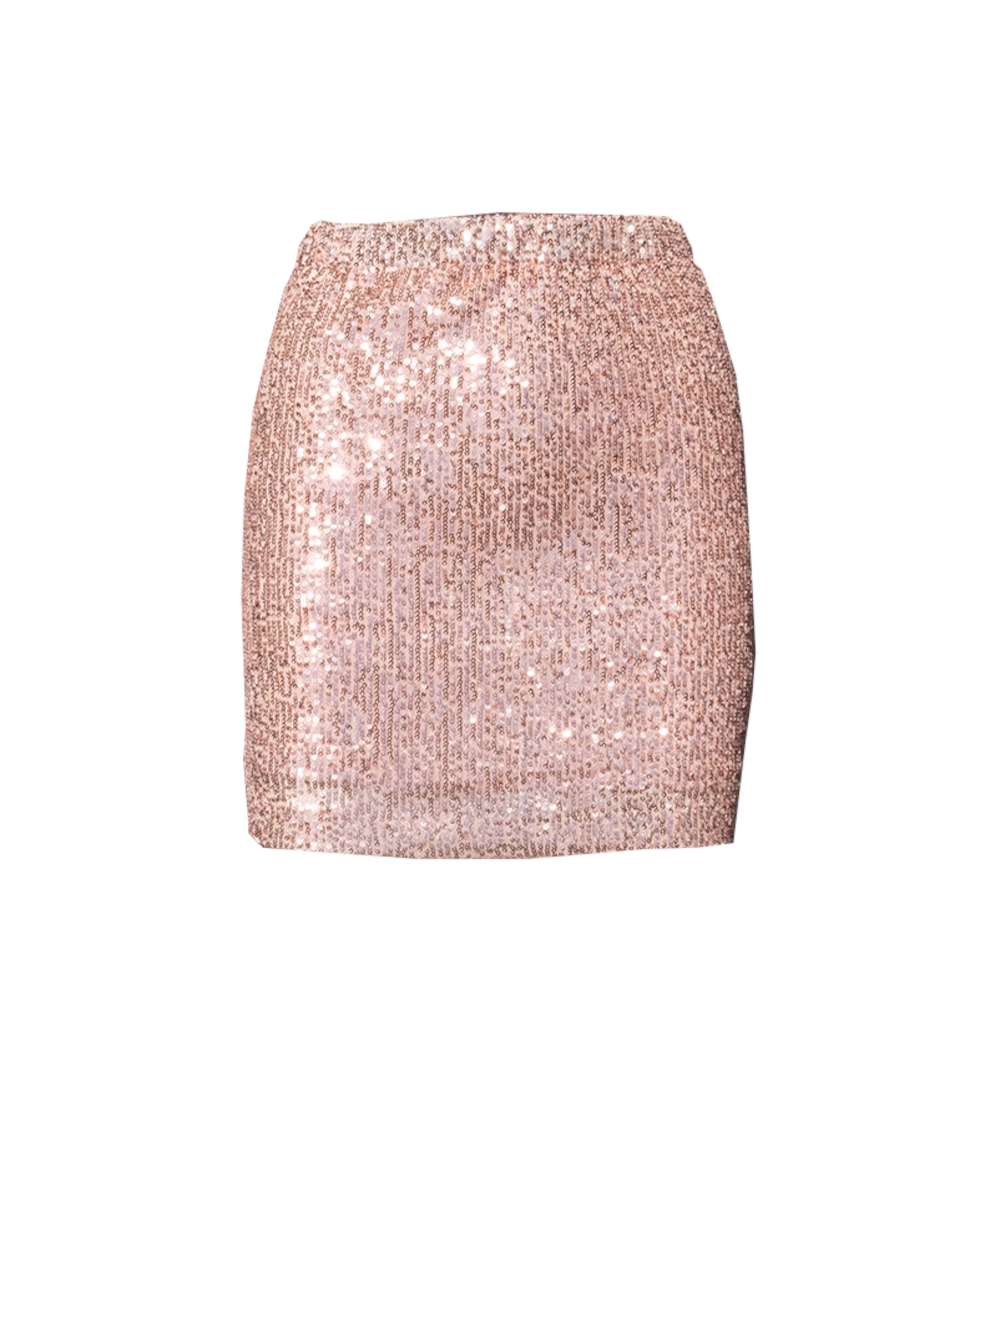 LINDA - Mini skirt in sequin pink